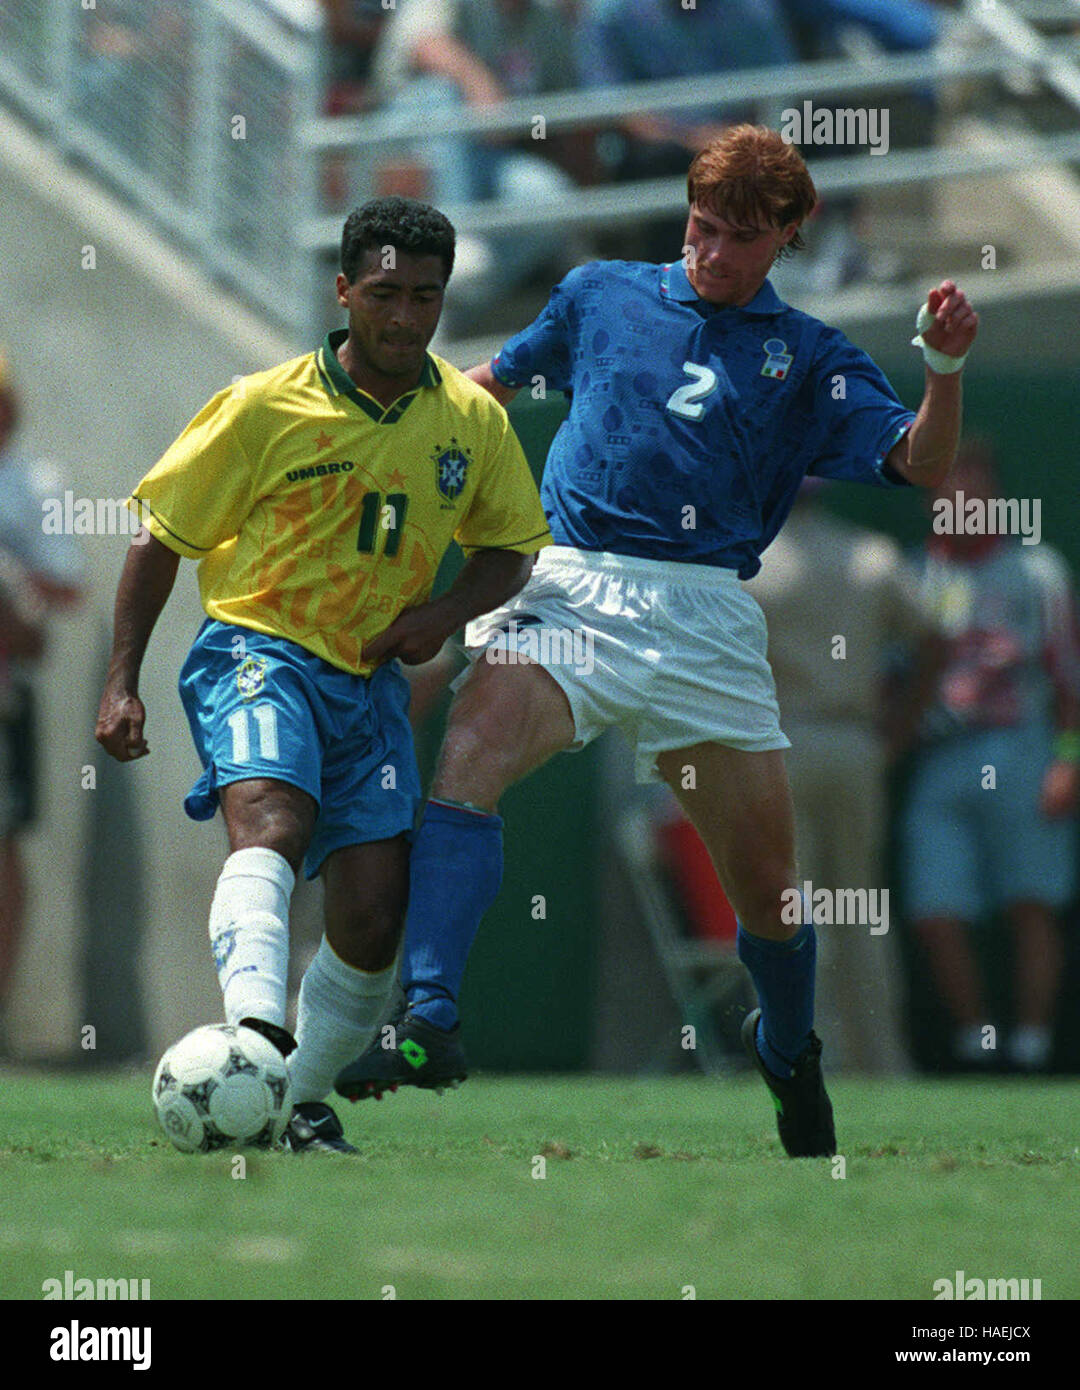 APOLLINI TAKES ON ROMARIO BRAZIL V ITALY WORLD CUP FINAL 17 July 1994 Stock Photo